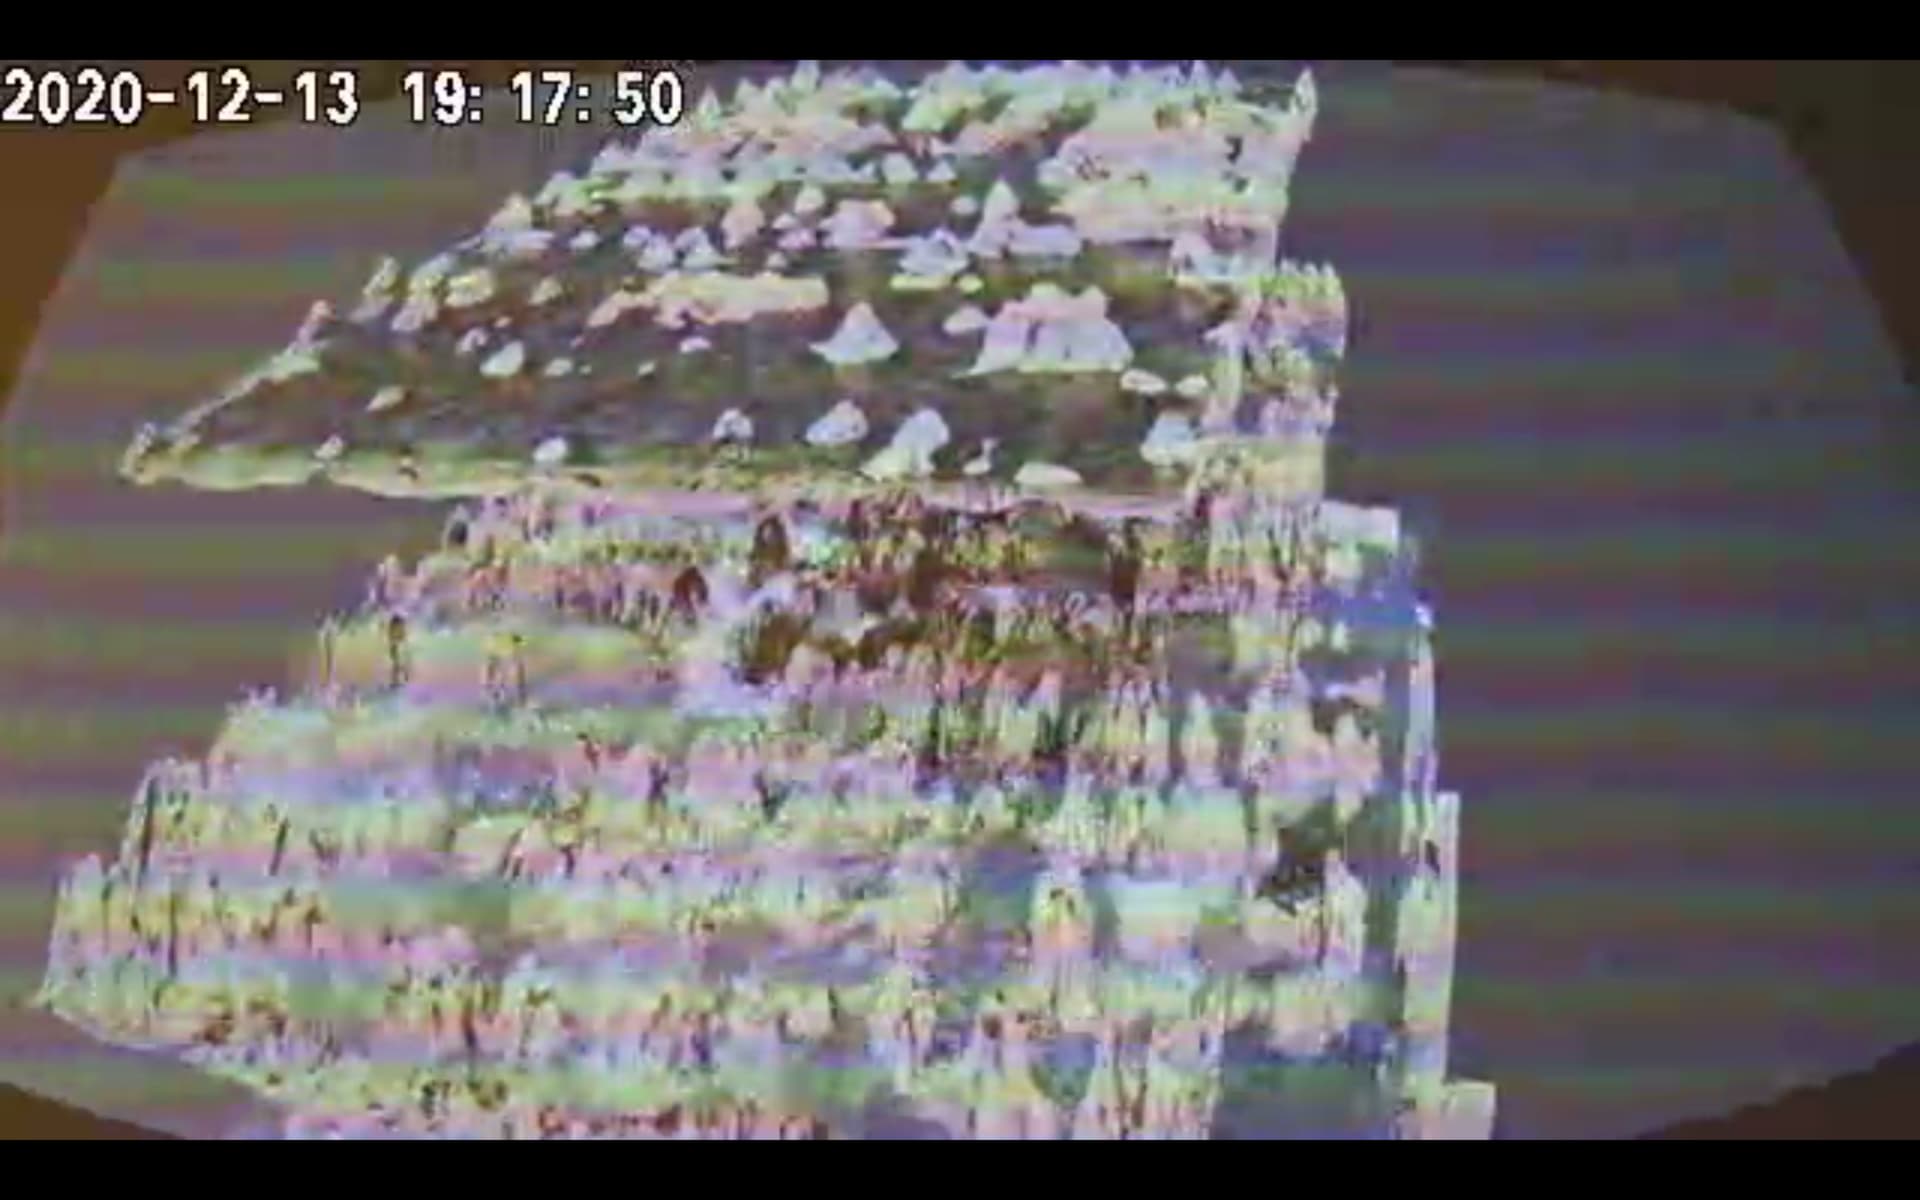 Sound landscape in CCTV camera